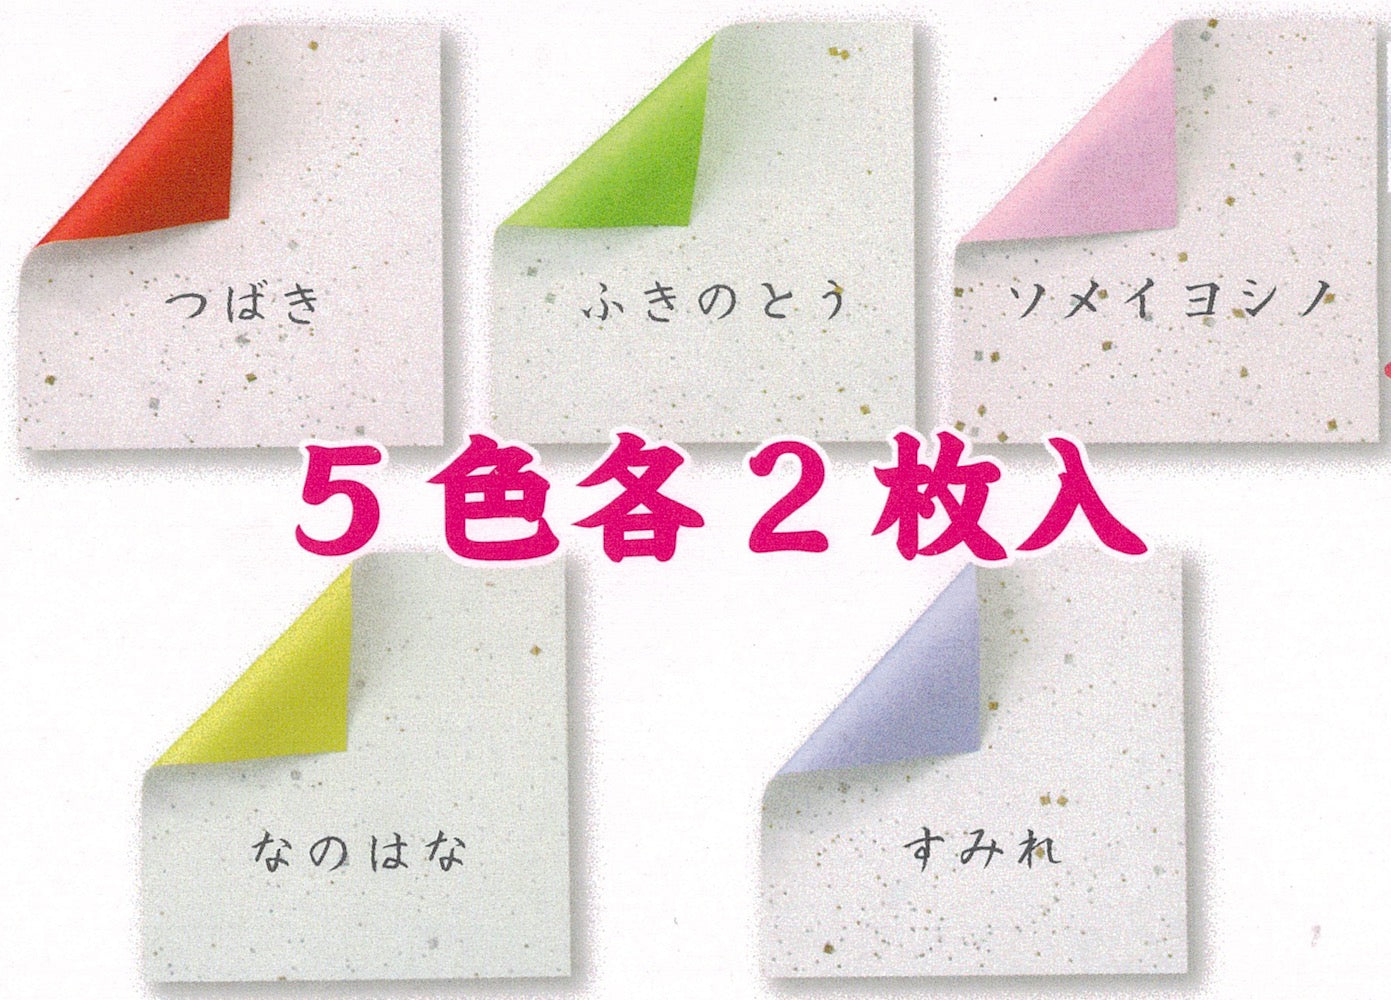 Hana Gokoro Origami Paper